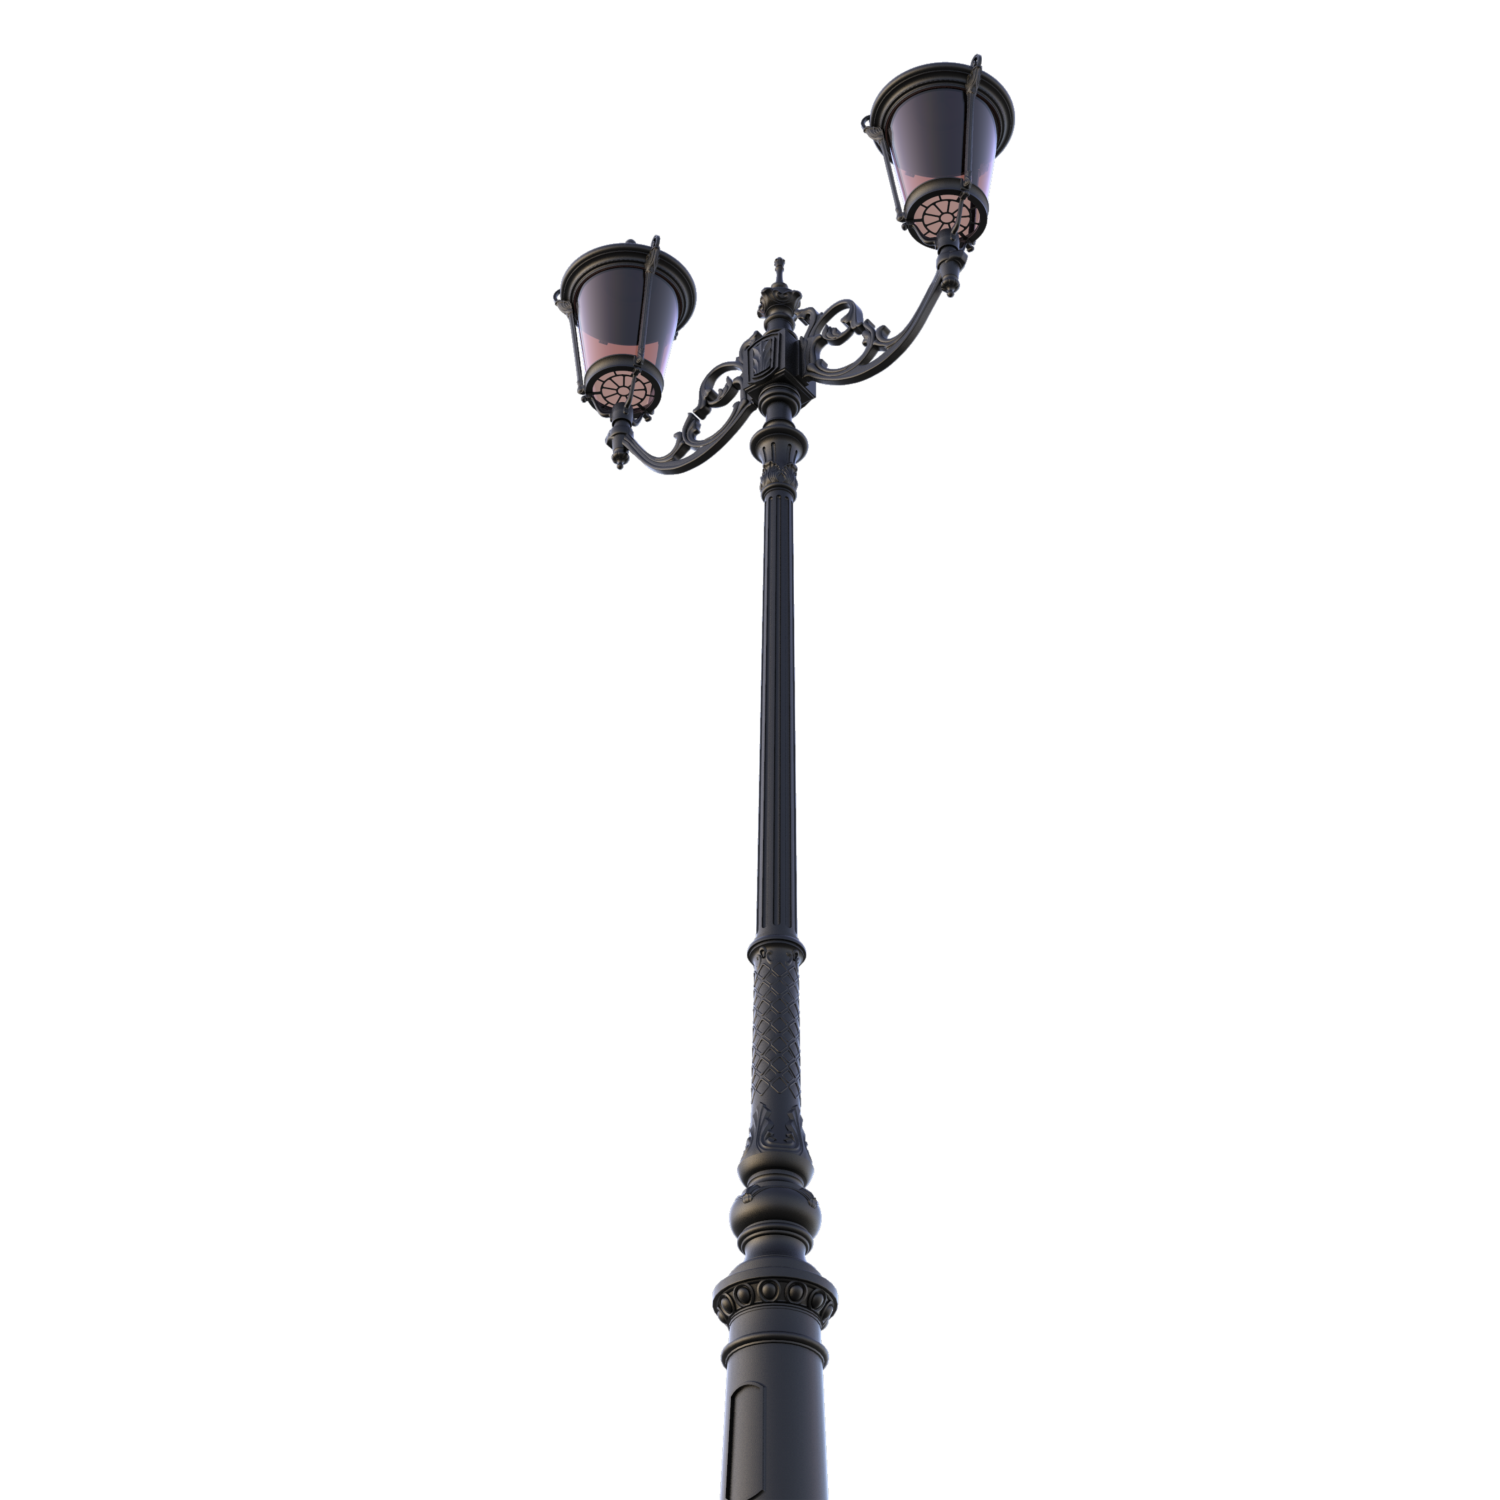 VENETIANGLOW Classic Artistic cast iron lamp pole